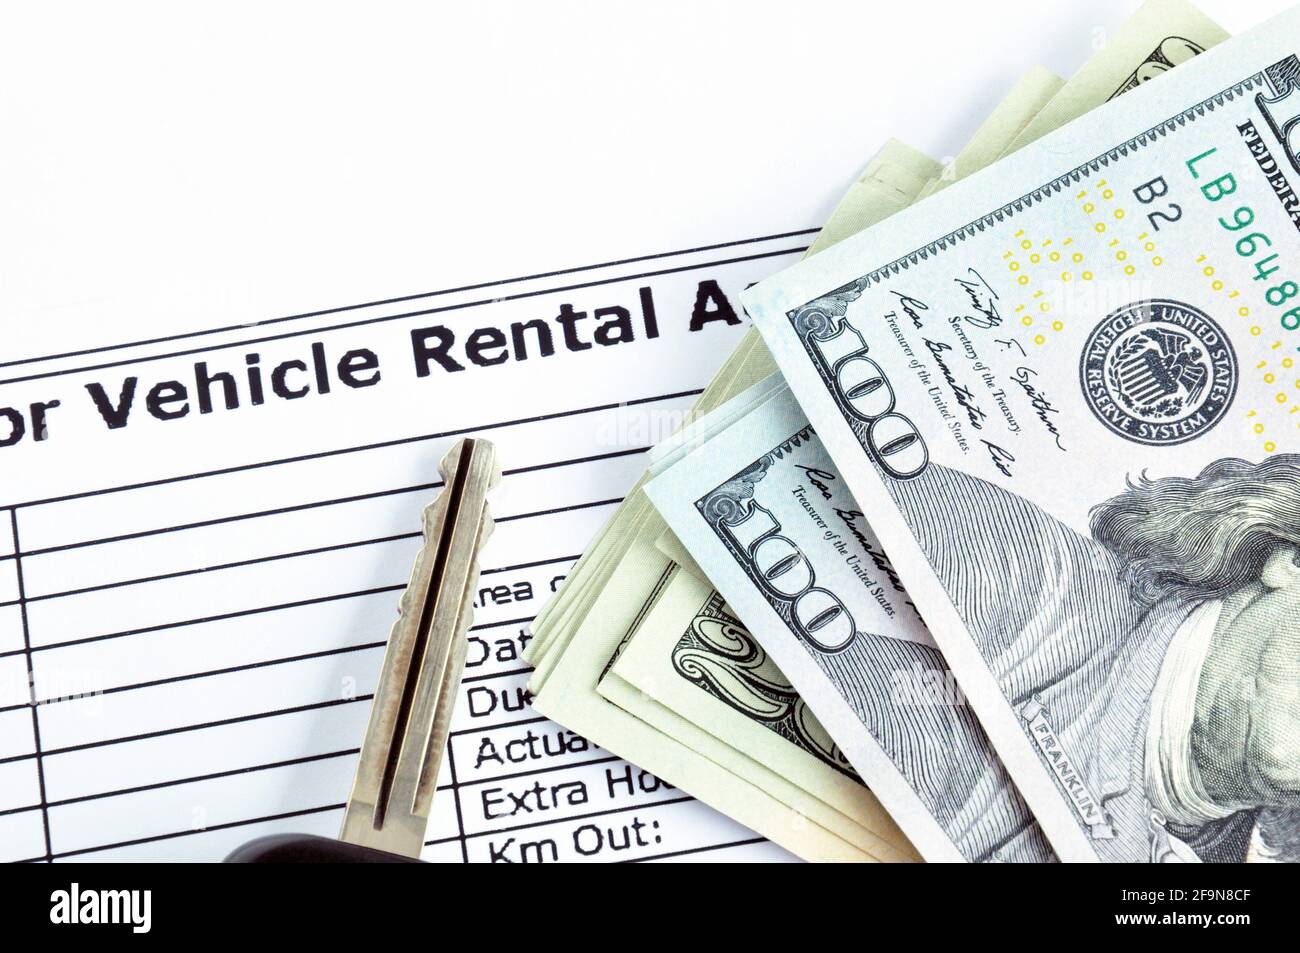 Money & car key on Vehicle Rental Agreement paper Stock Photo